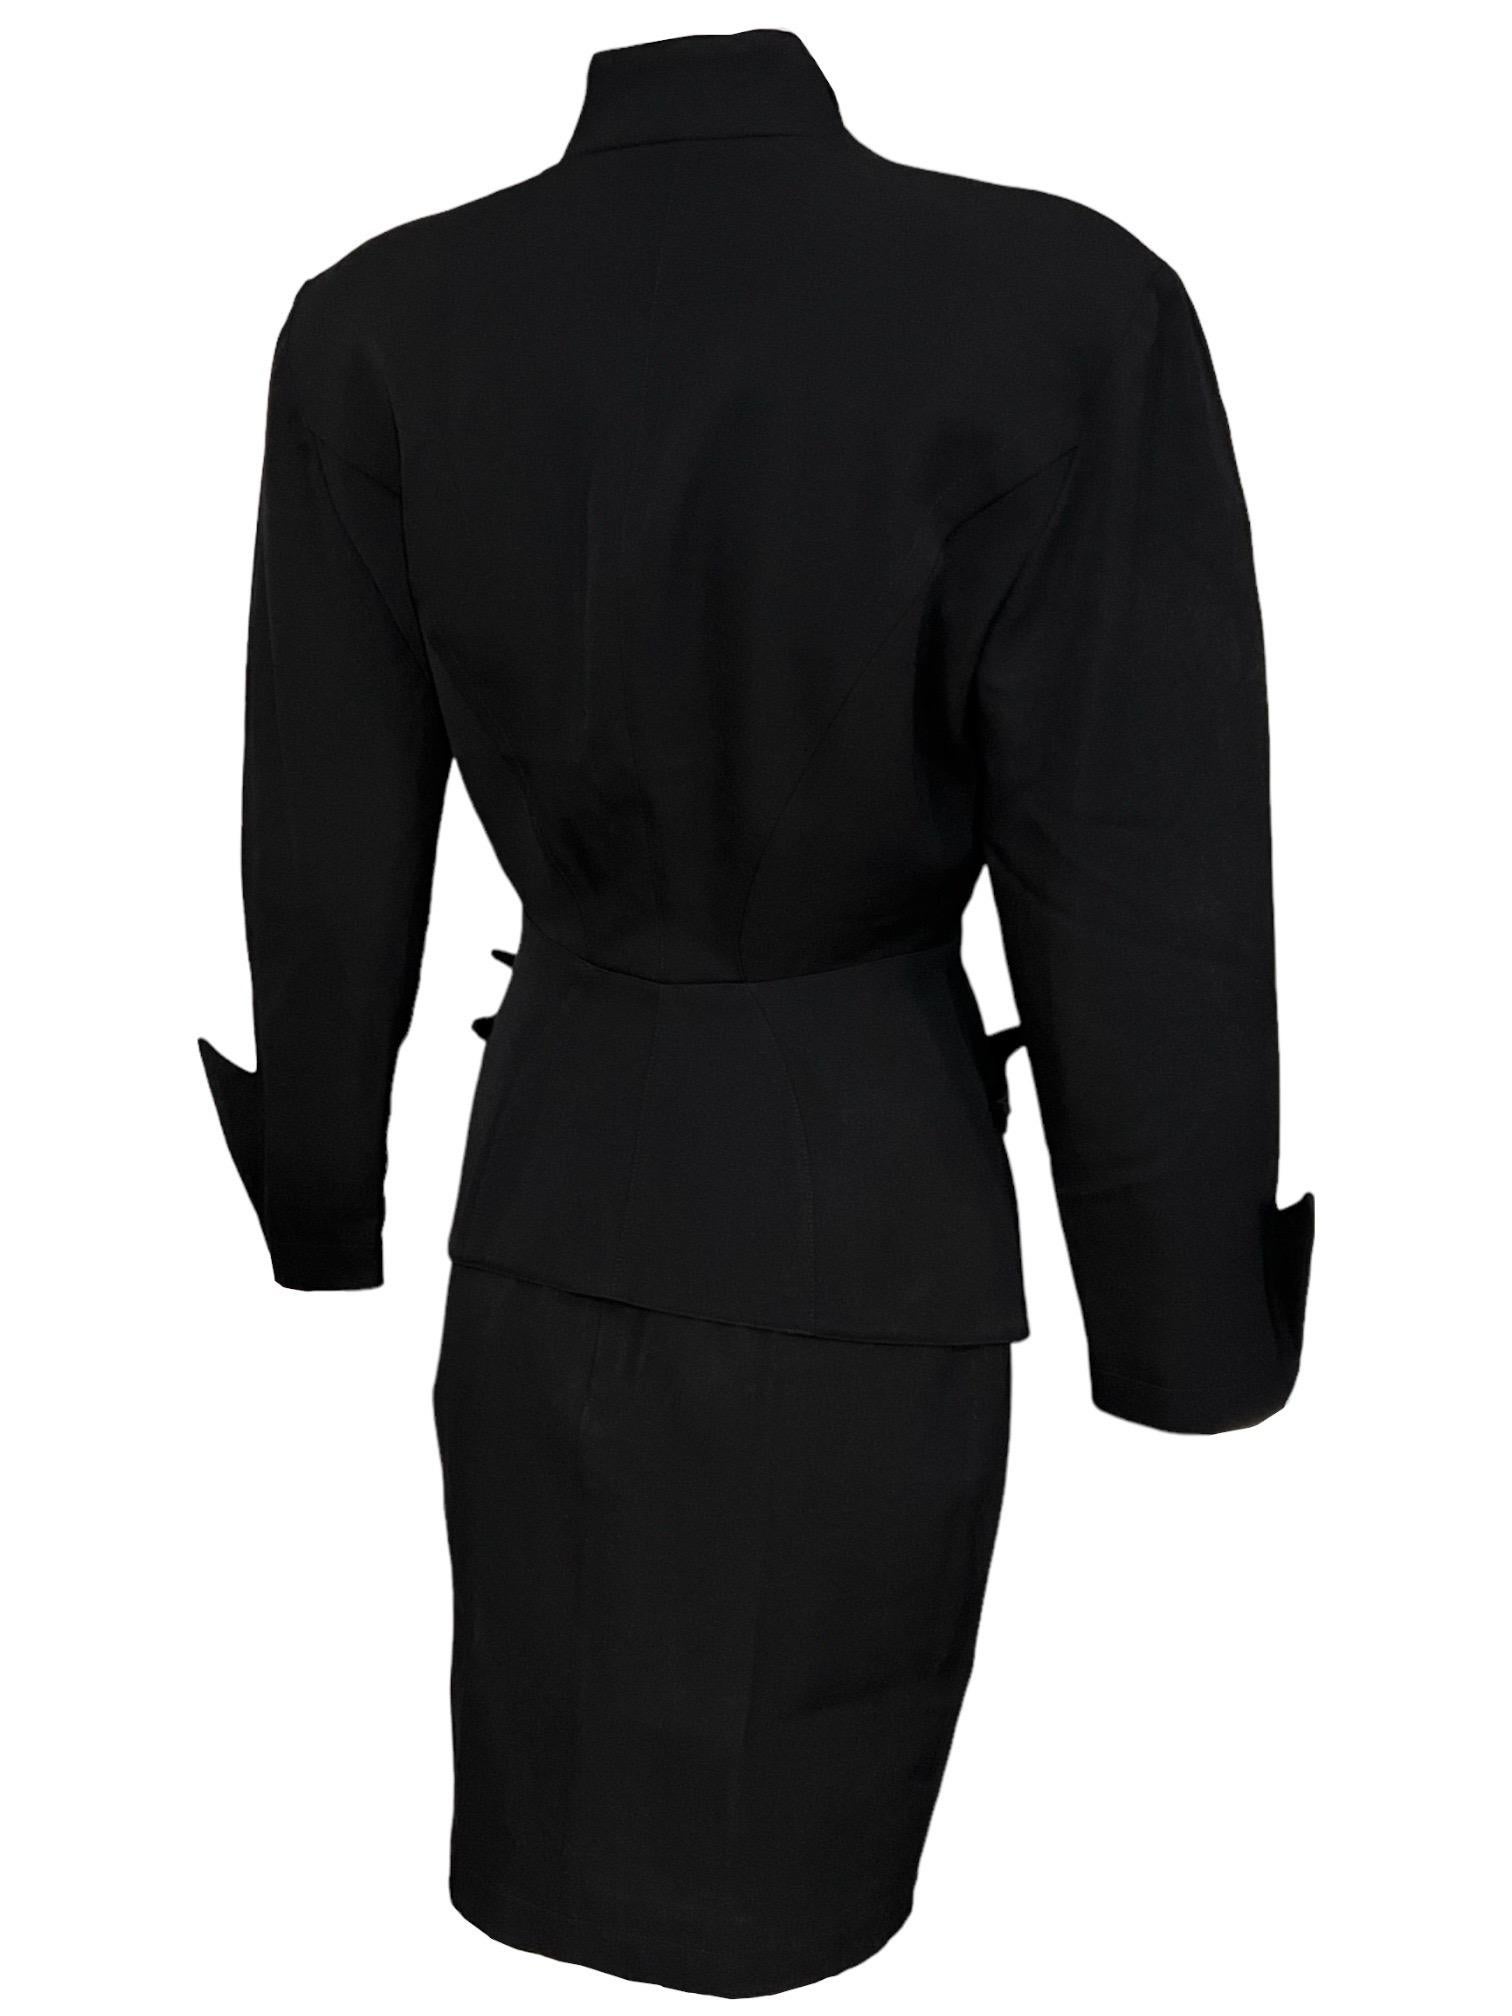 F/W 1989 Thierry Mugler Black Futuristic Bullet Skirt Suit 3